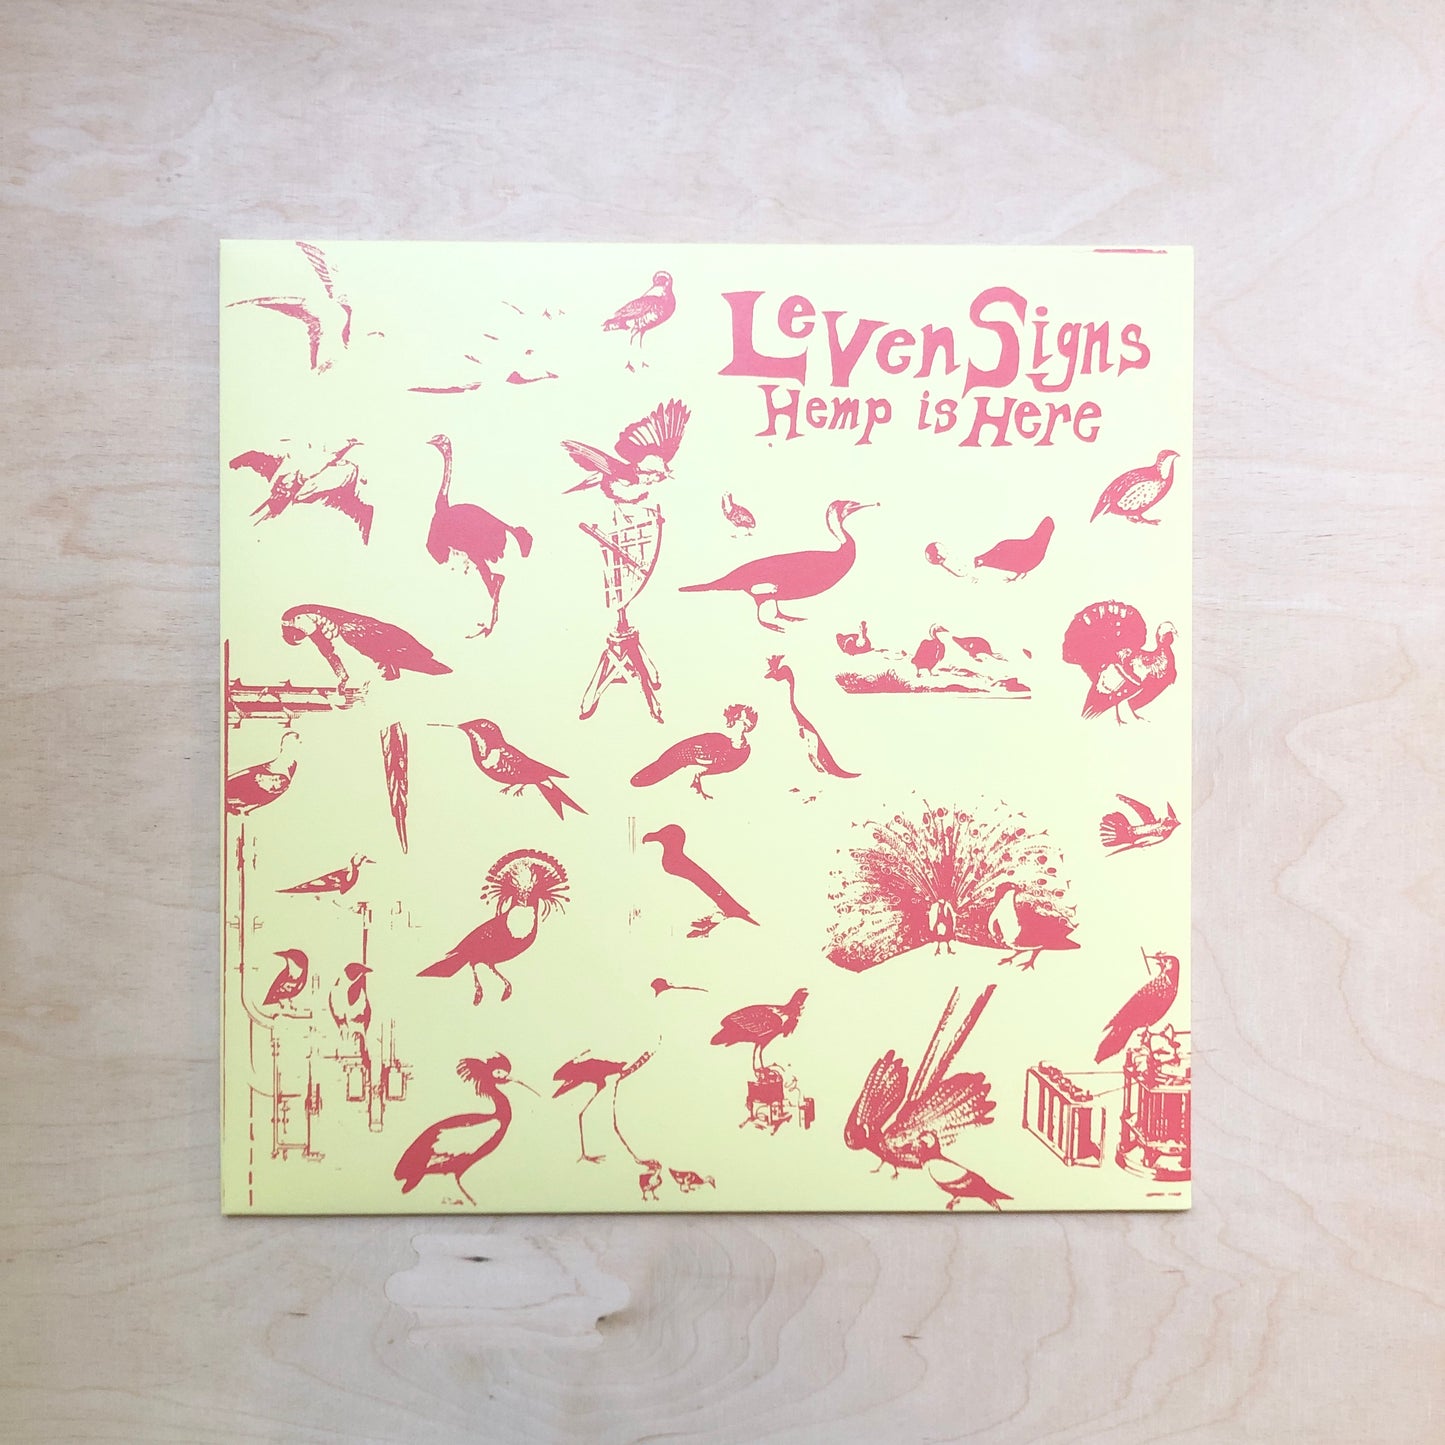 Leven Signs - Hemp Is Here - LP